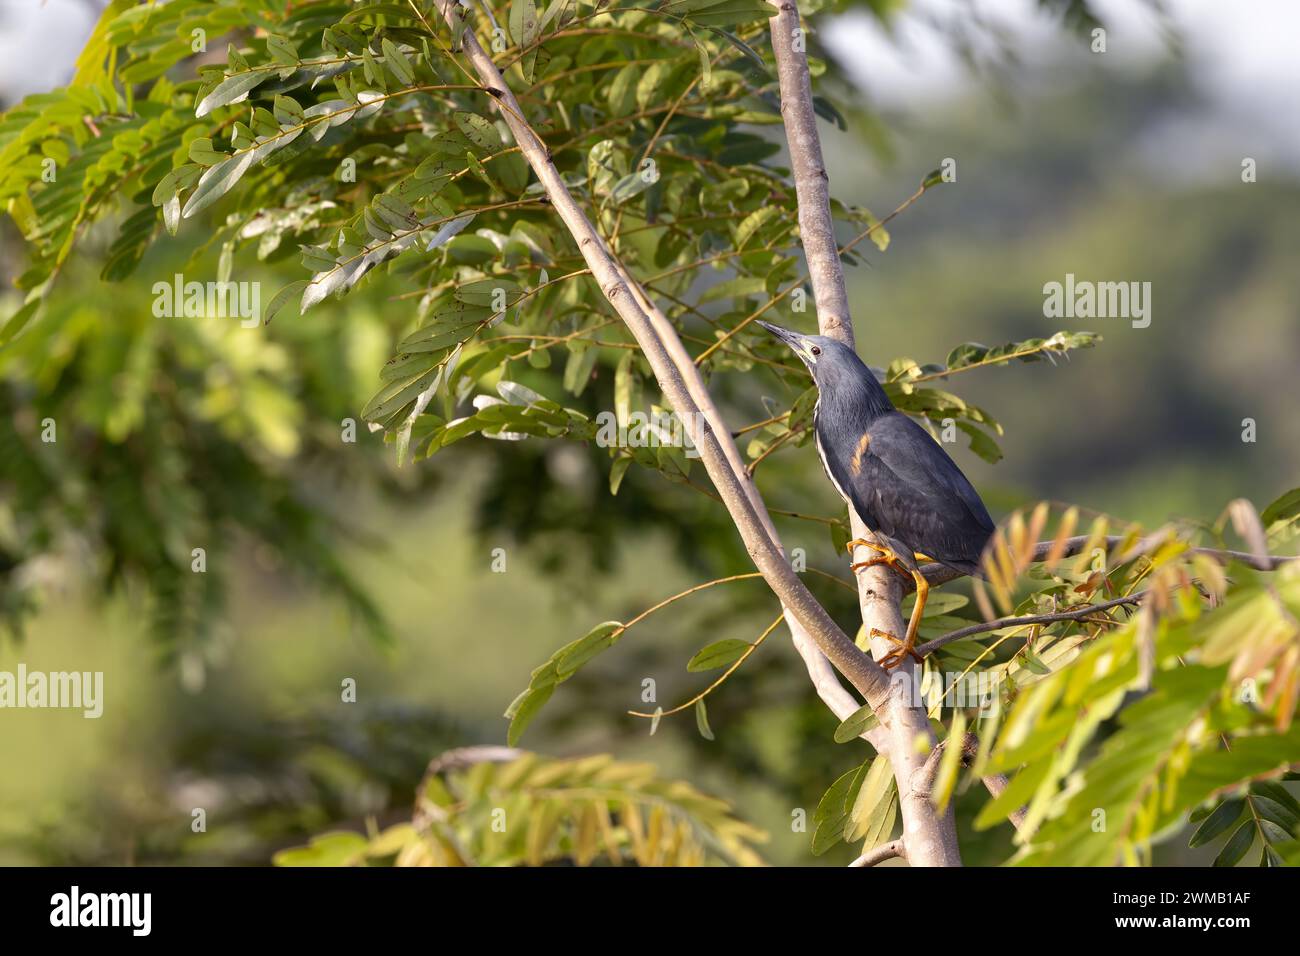 Adult dwarf bittern, ixobrychus sturmii, perched in a tree in Queen Elizabeth National Park, Uganda. This shy migrant bird is found in wetland areas a Stock Photo